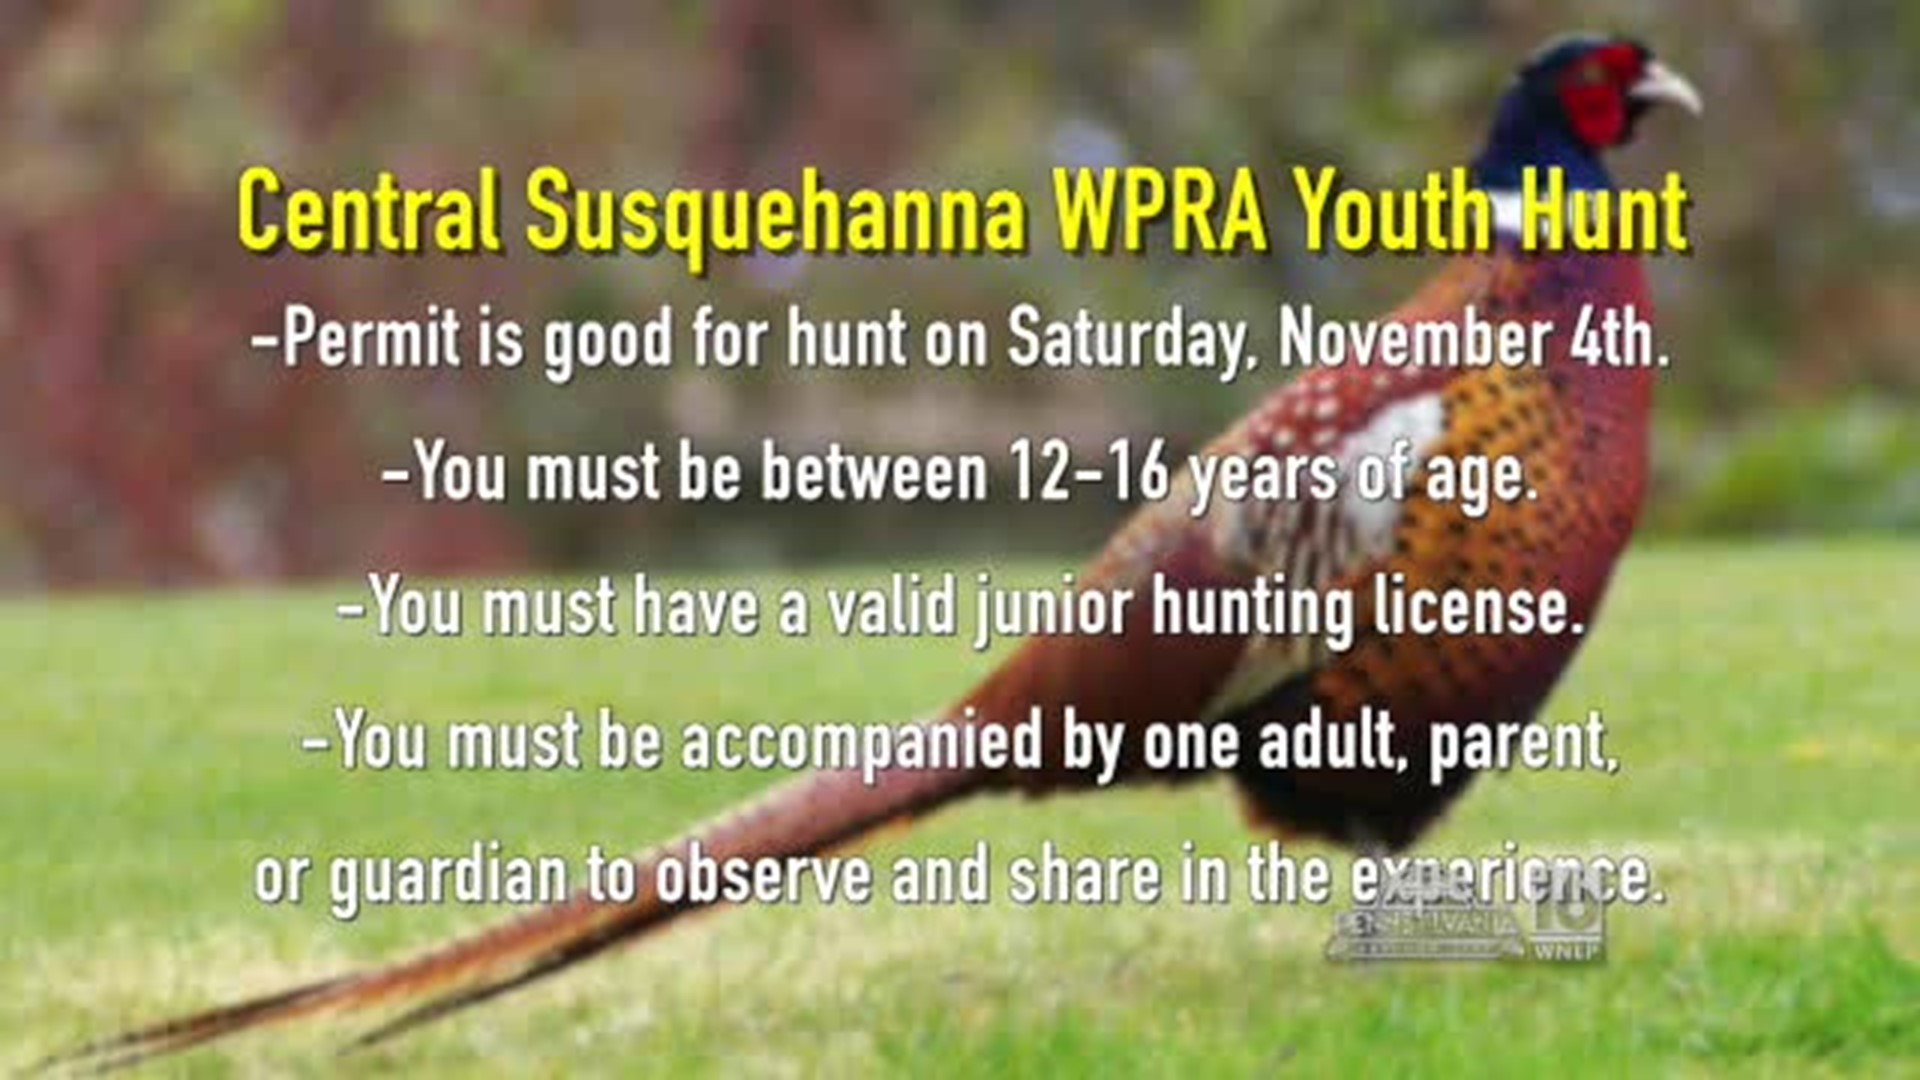 Central Susquehanna Pheasants Forever WPRA Youth Pheasant Hunt Details